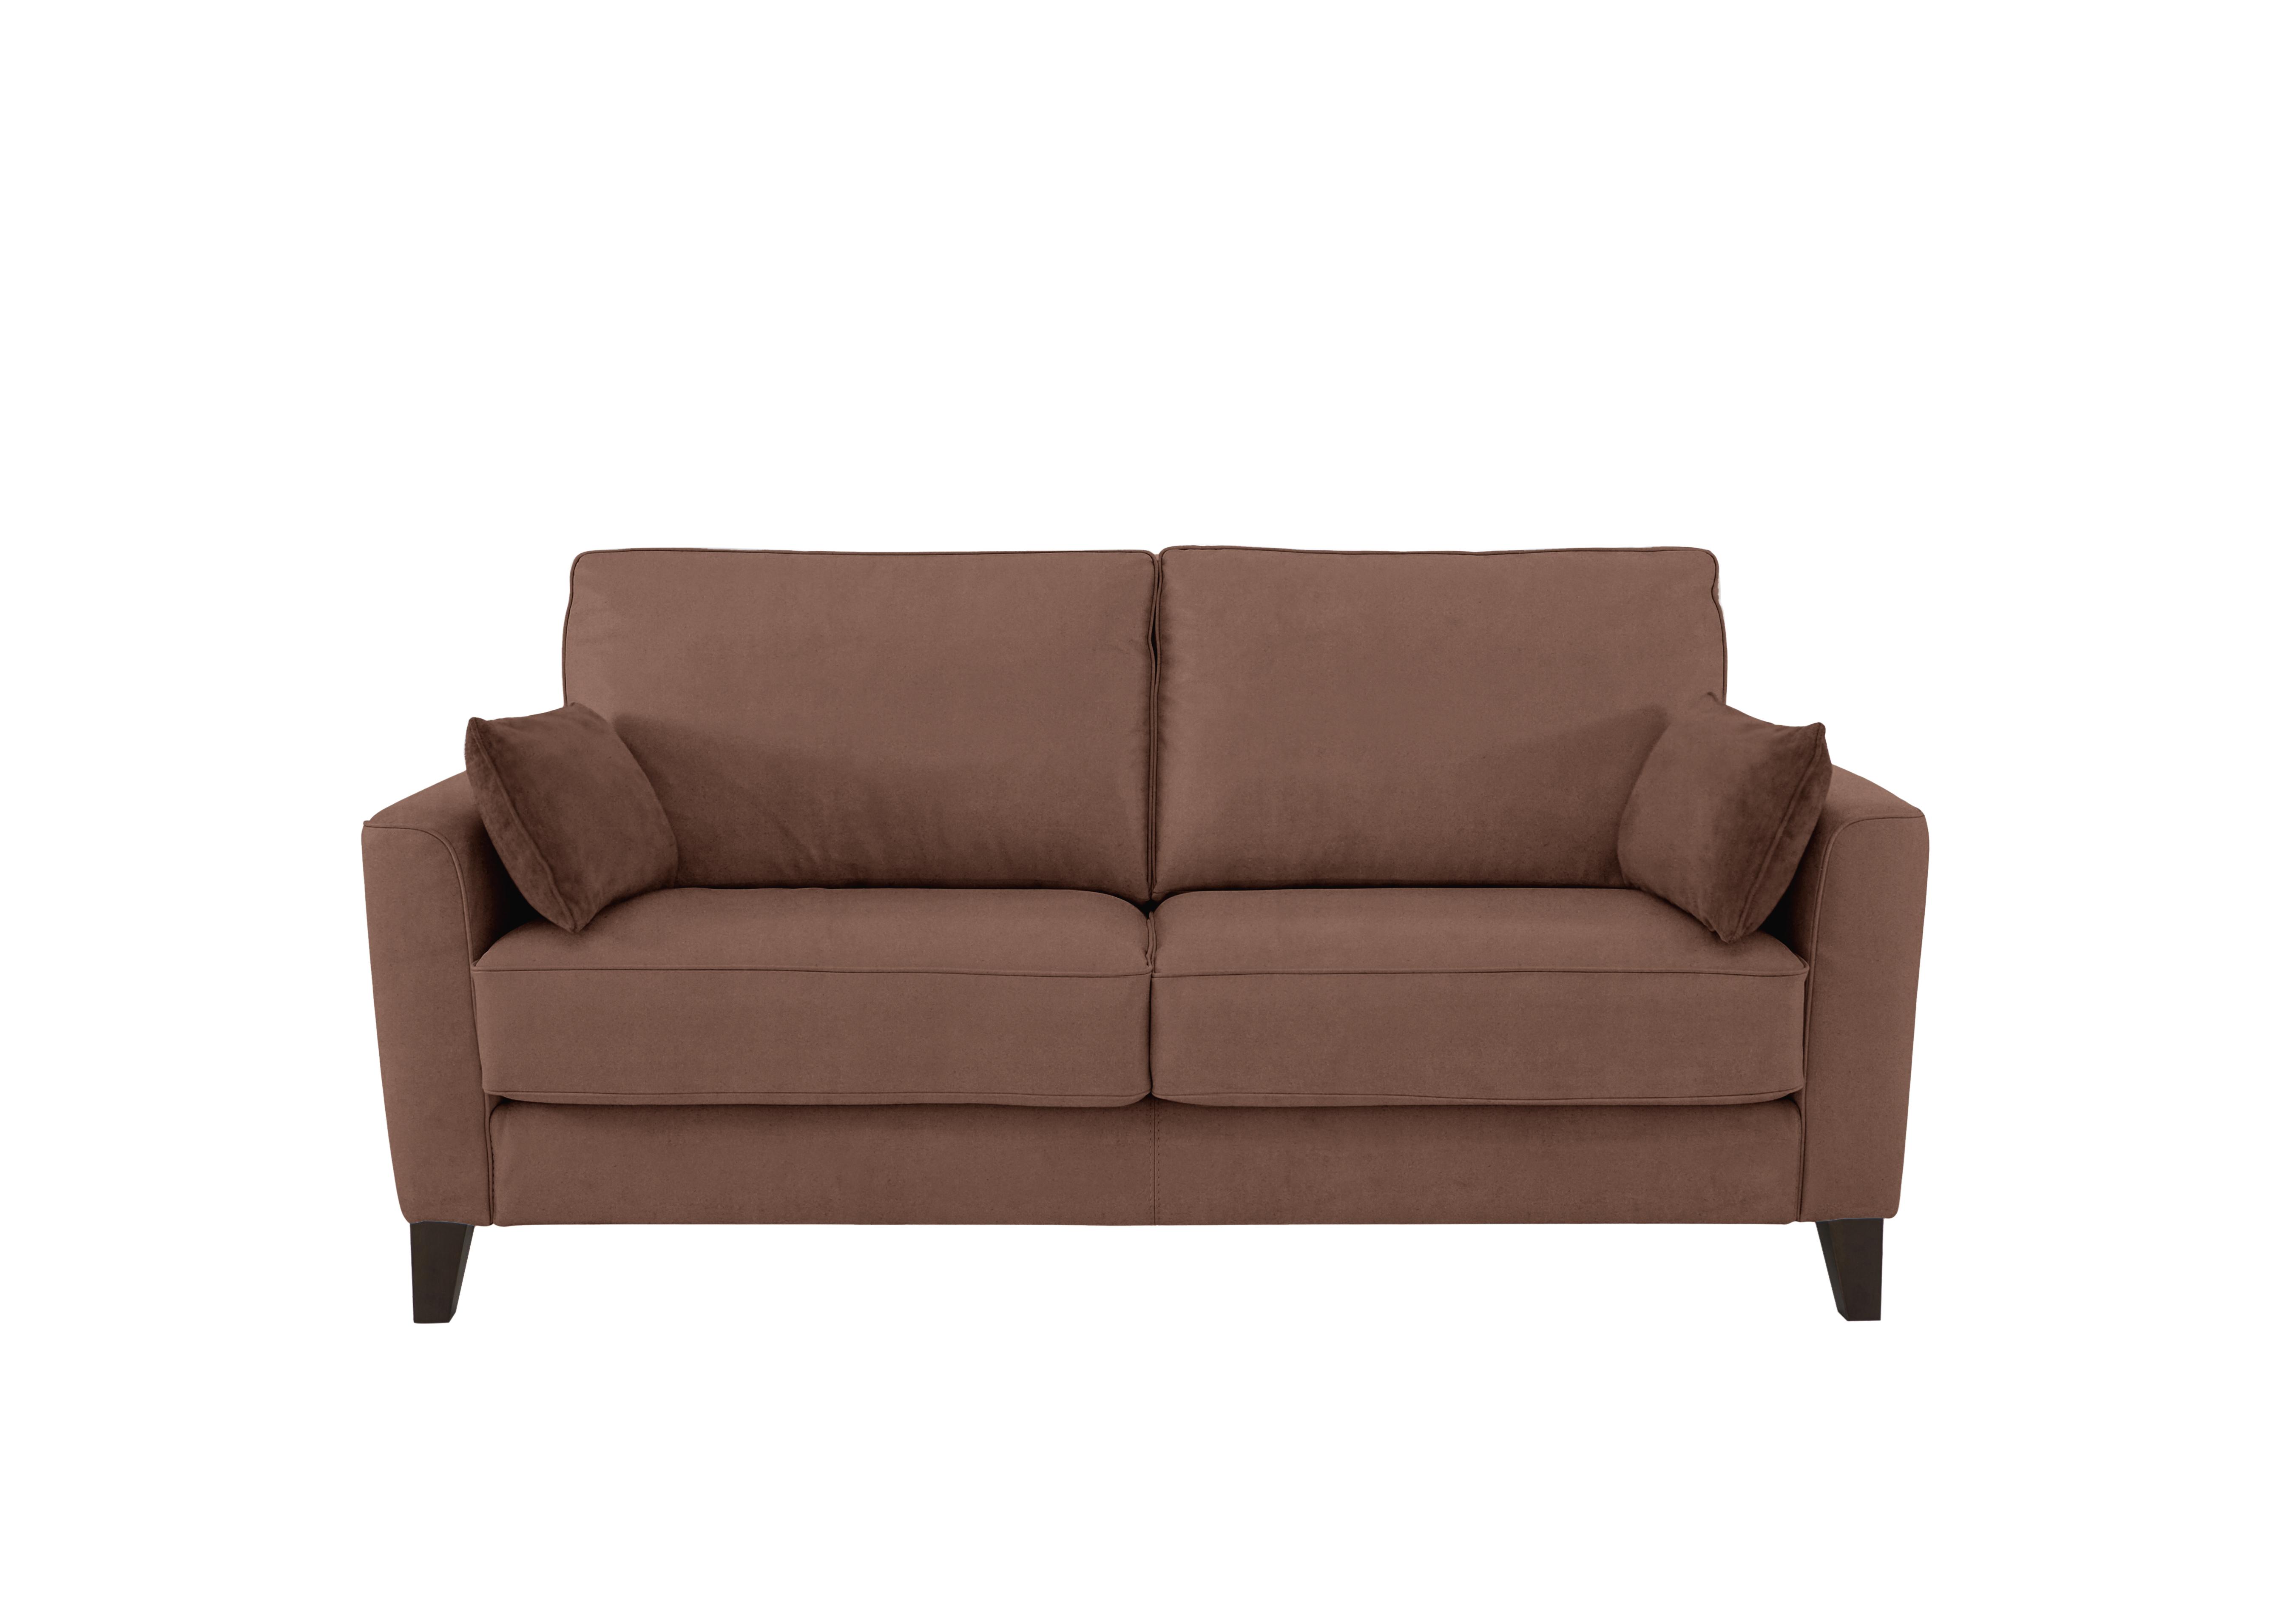 Brondby 2 Seater Fabric Sofa in Bfa-Blj-R05 Hazelnut on Furniture Village